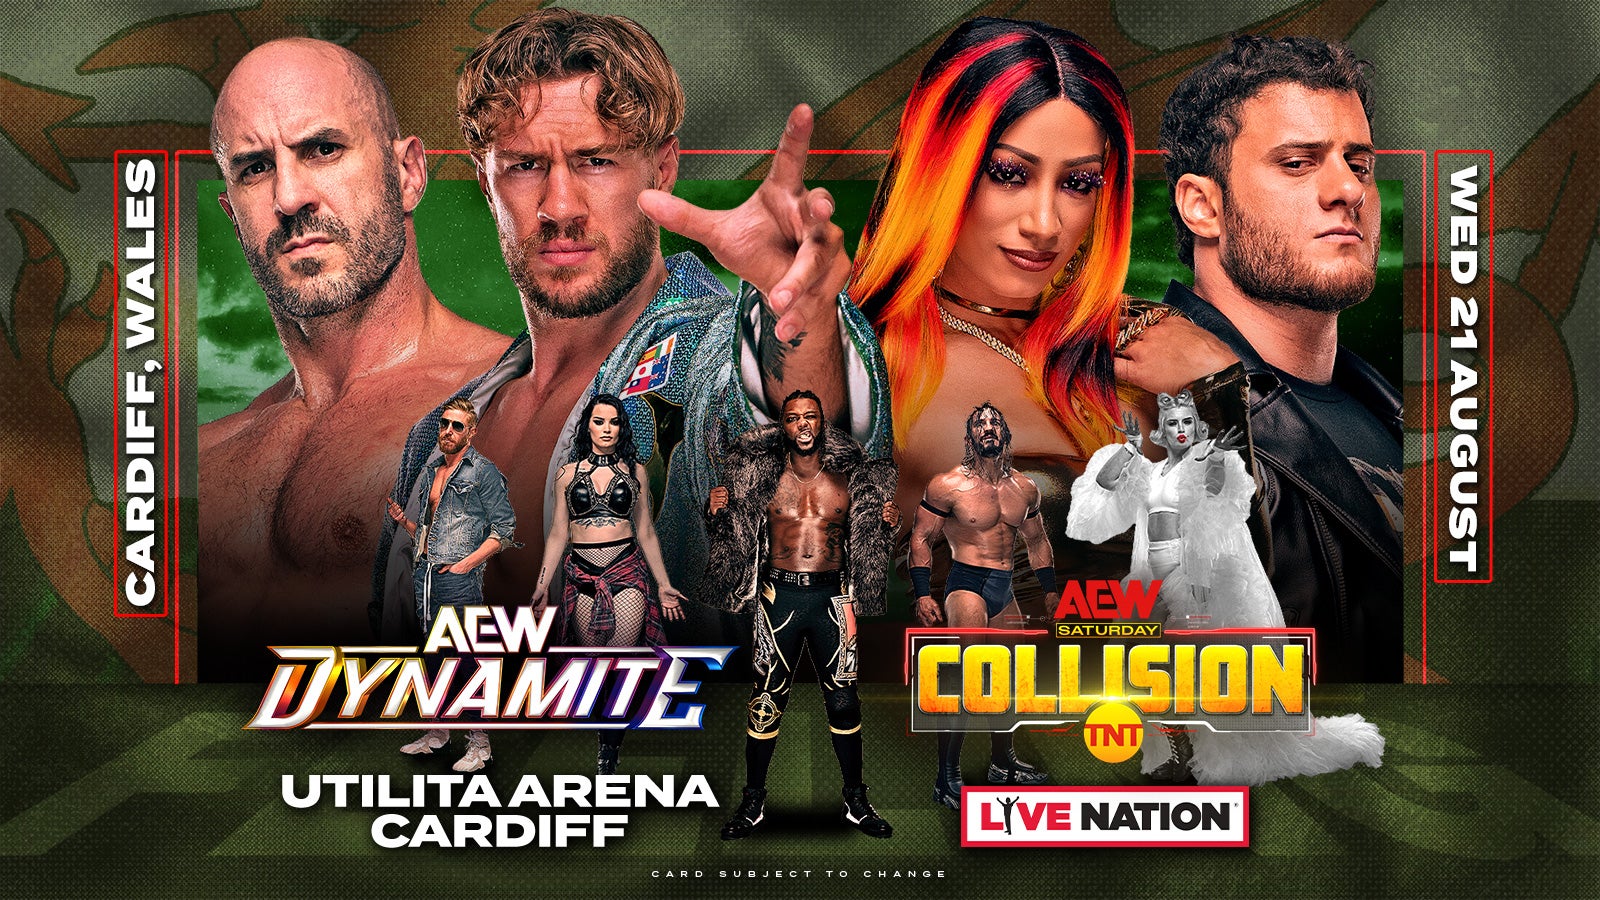 AEW: Dynamite & Collision Event Title Pic